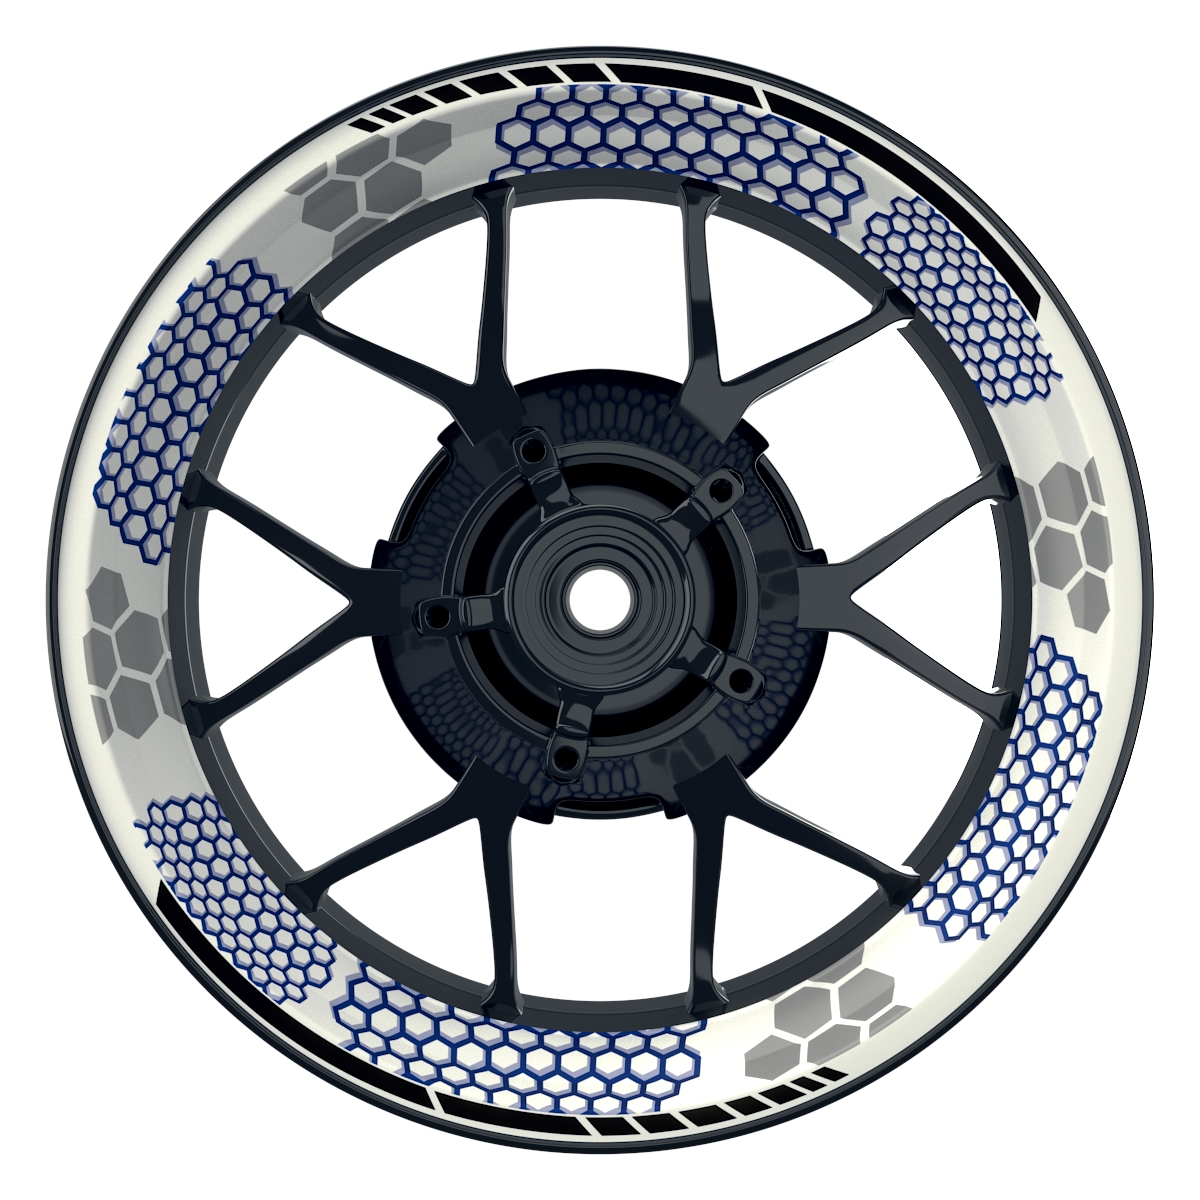 Hexagon weiss neutral blau Wheelsticker Felgenaufkleber